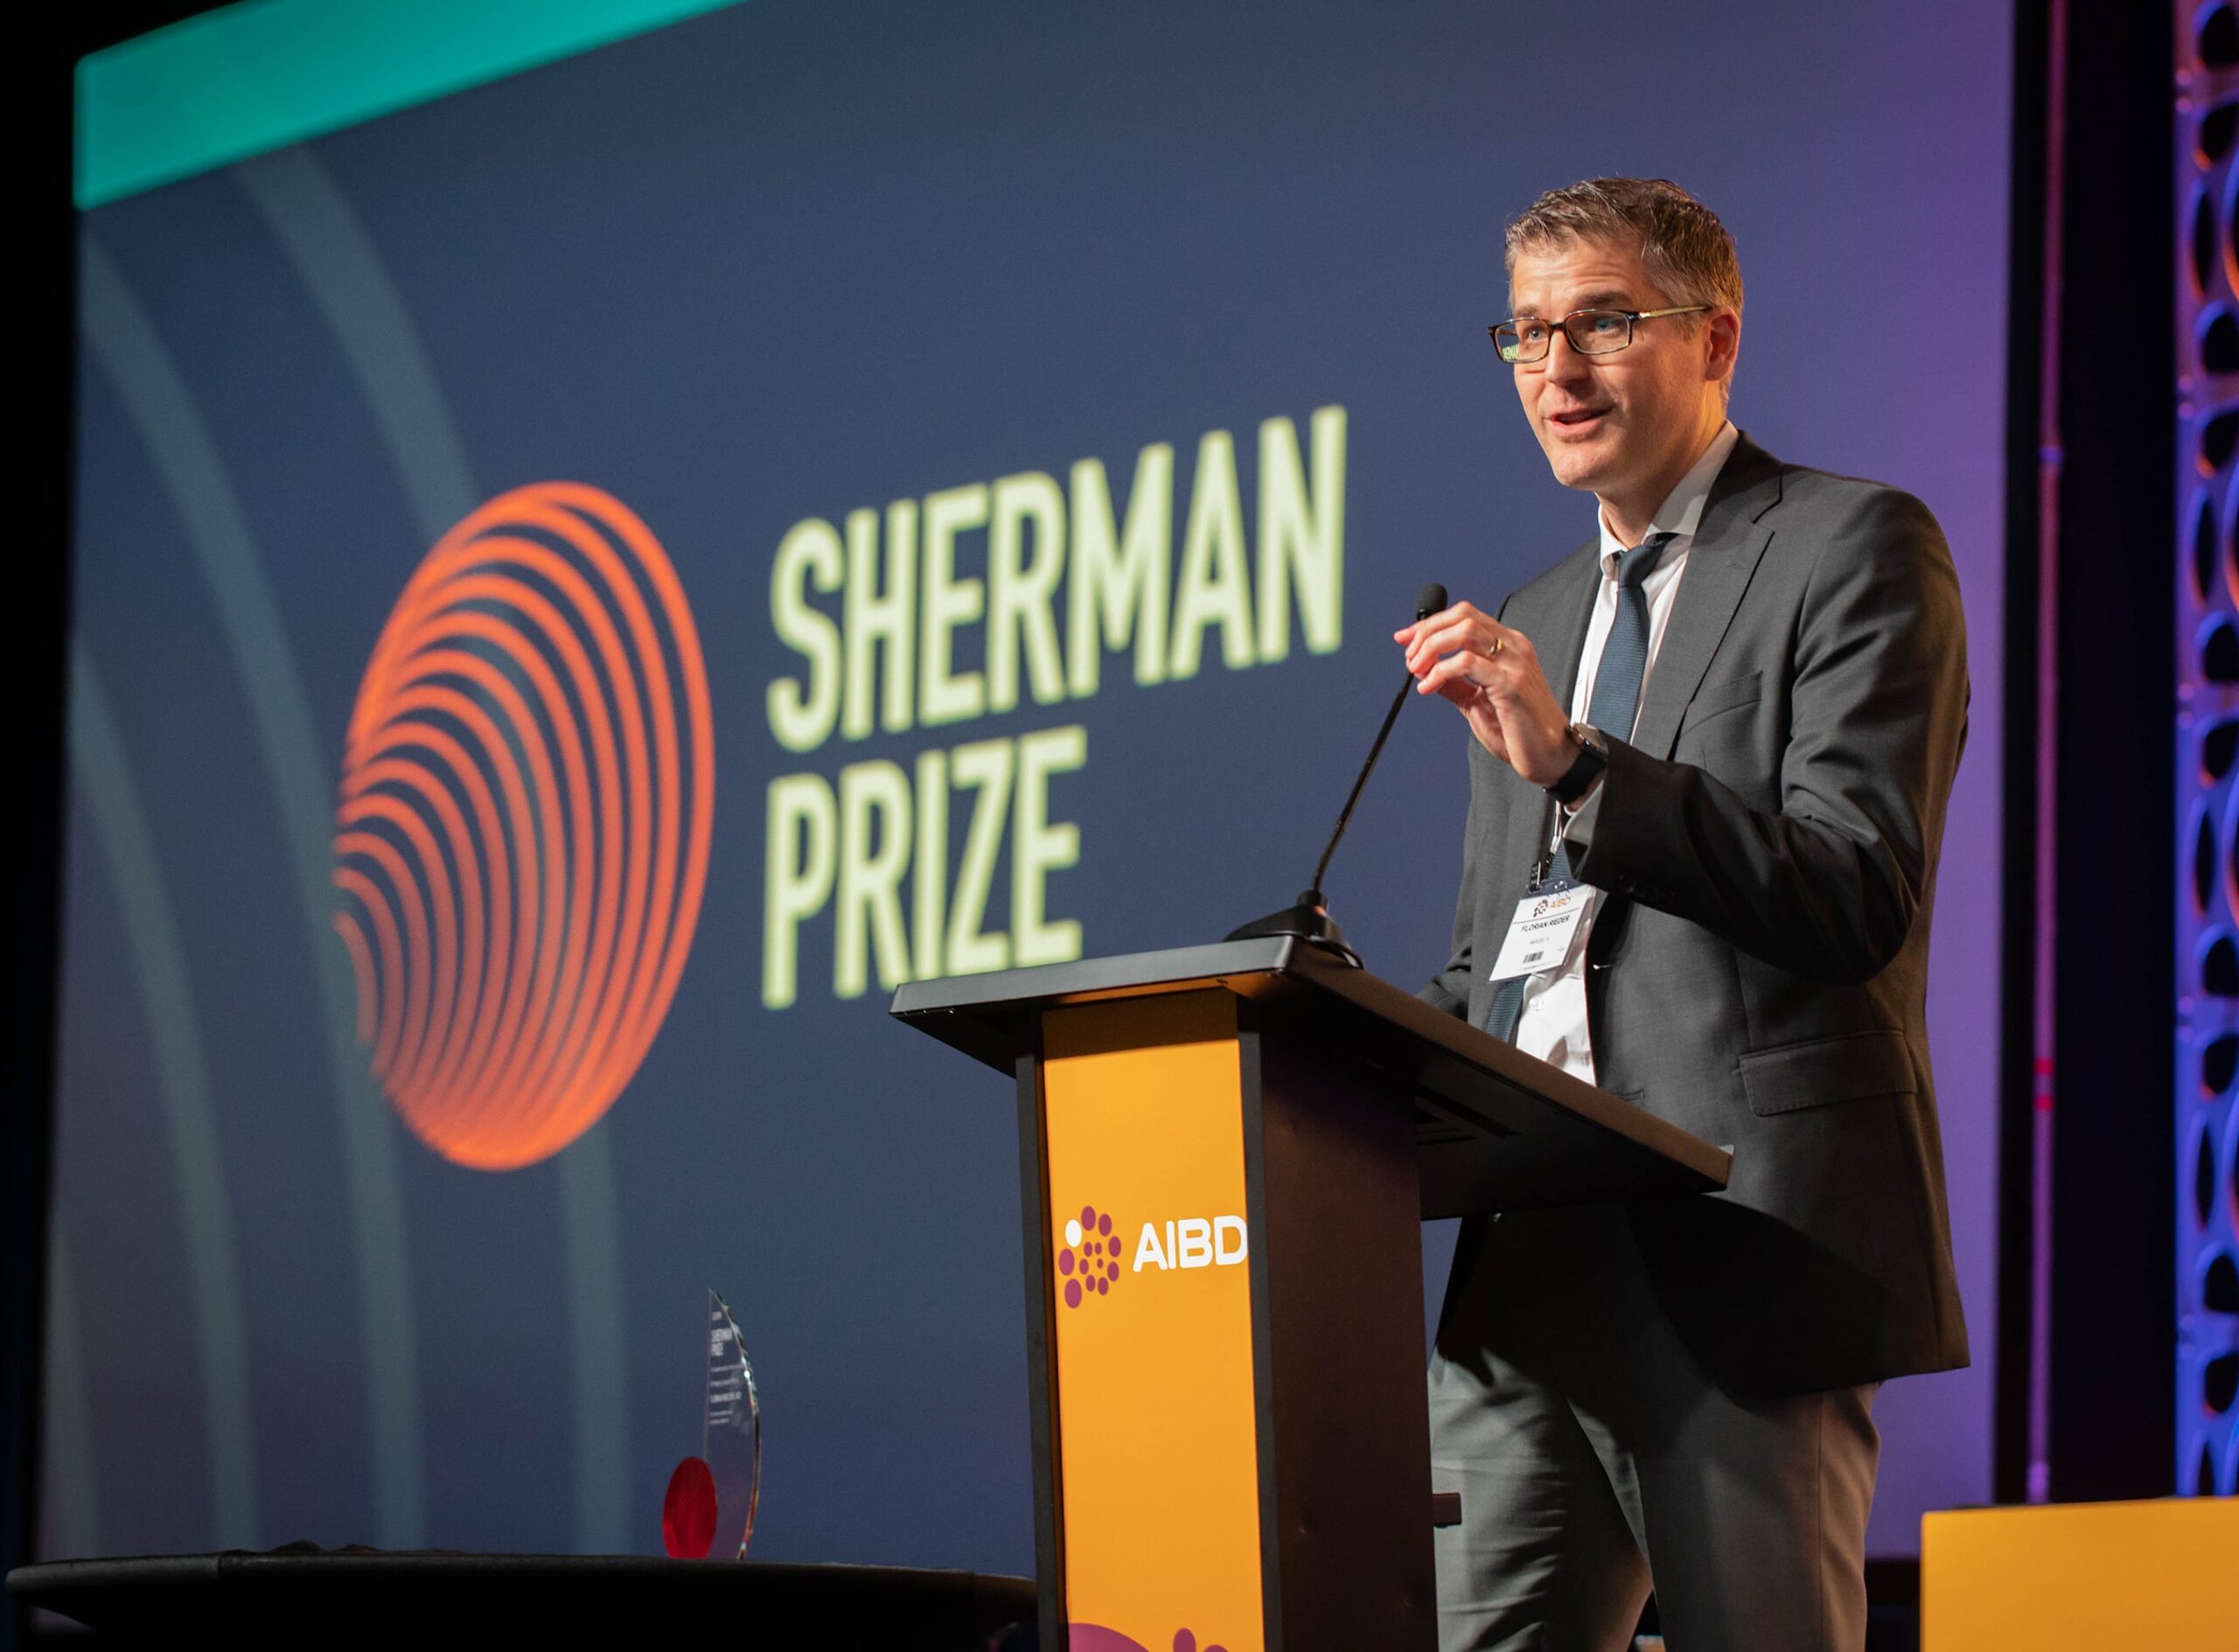 <p>2019 Sherman Emerging Leader Prize Recipient: Dr. Florian Rieder</p>
